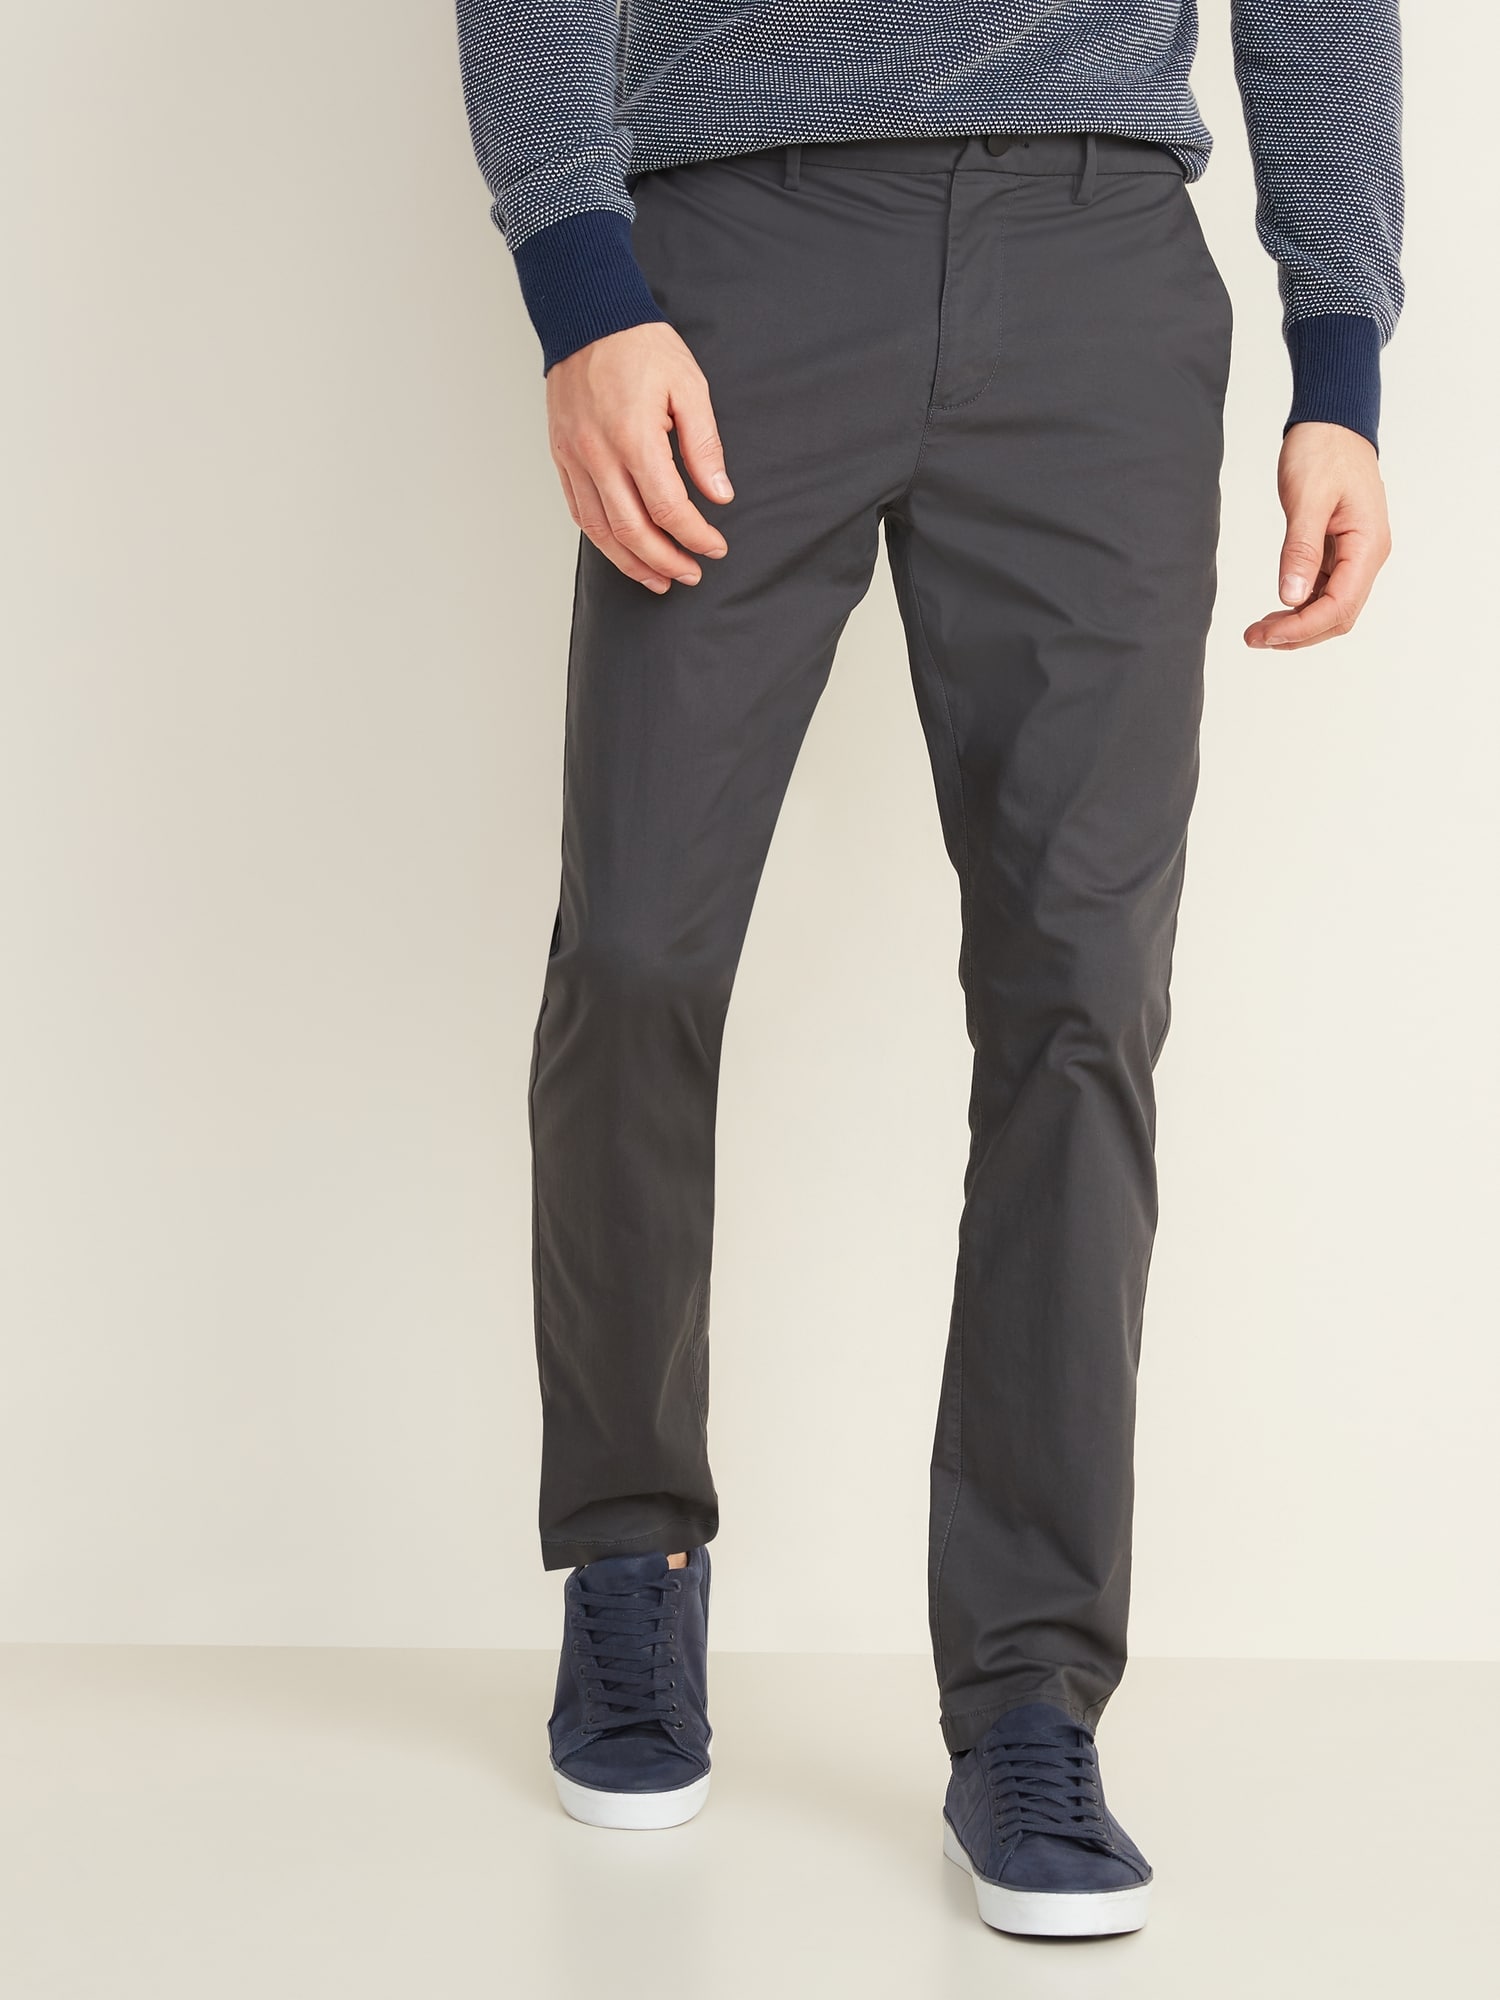 Old Navy Slim Built-In Flex Ultimate Tech Chino Pants for Men black. 1